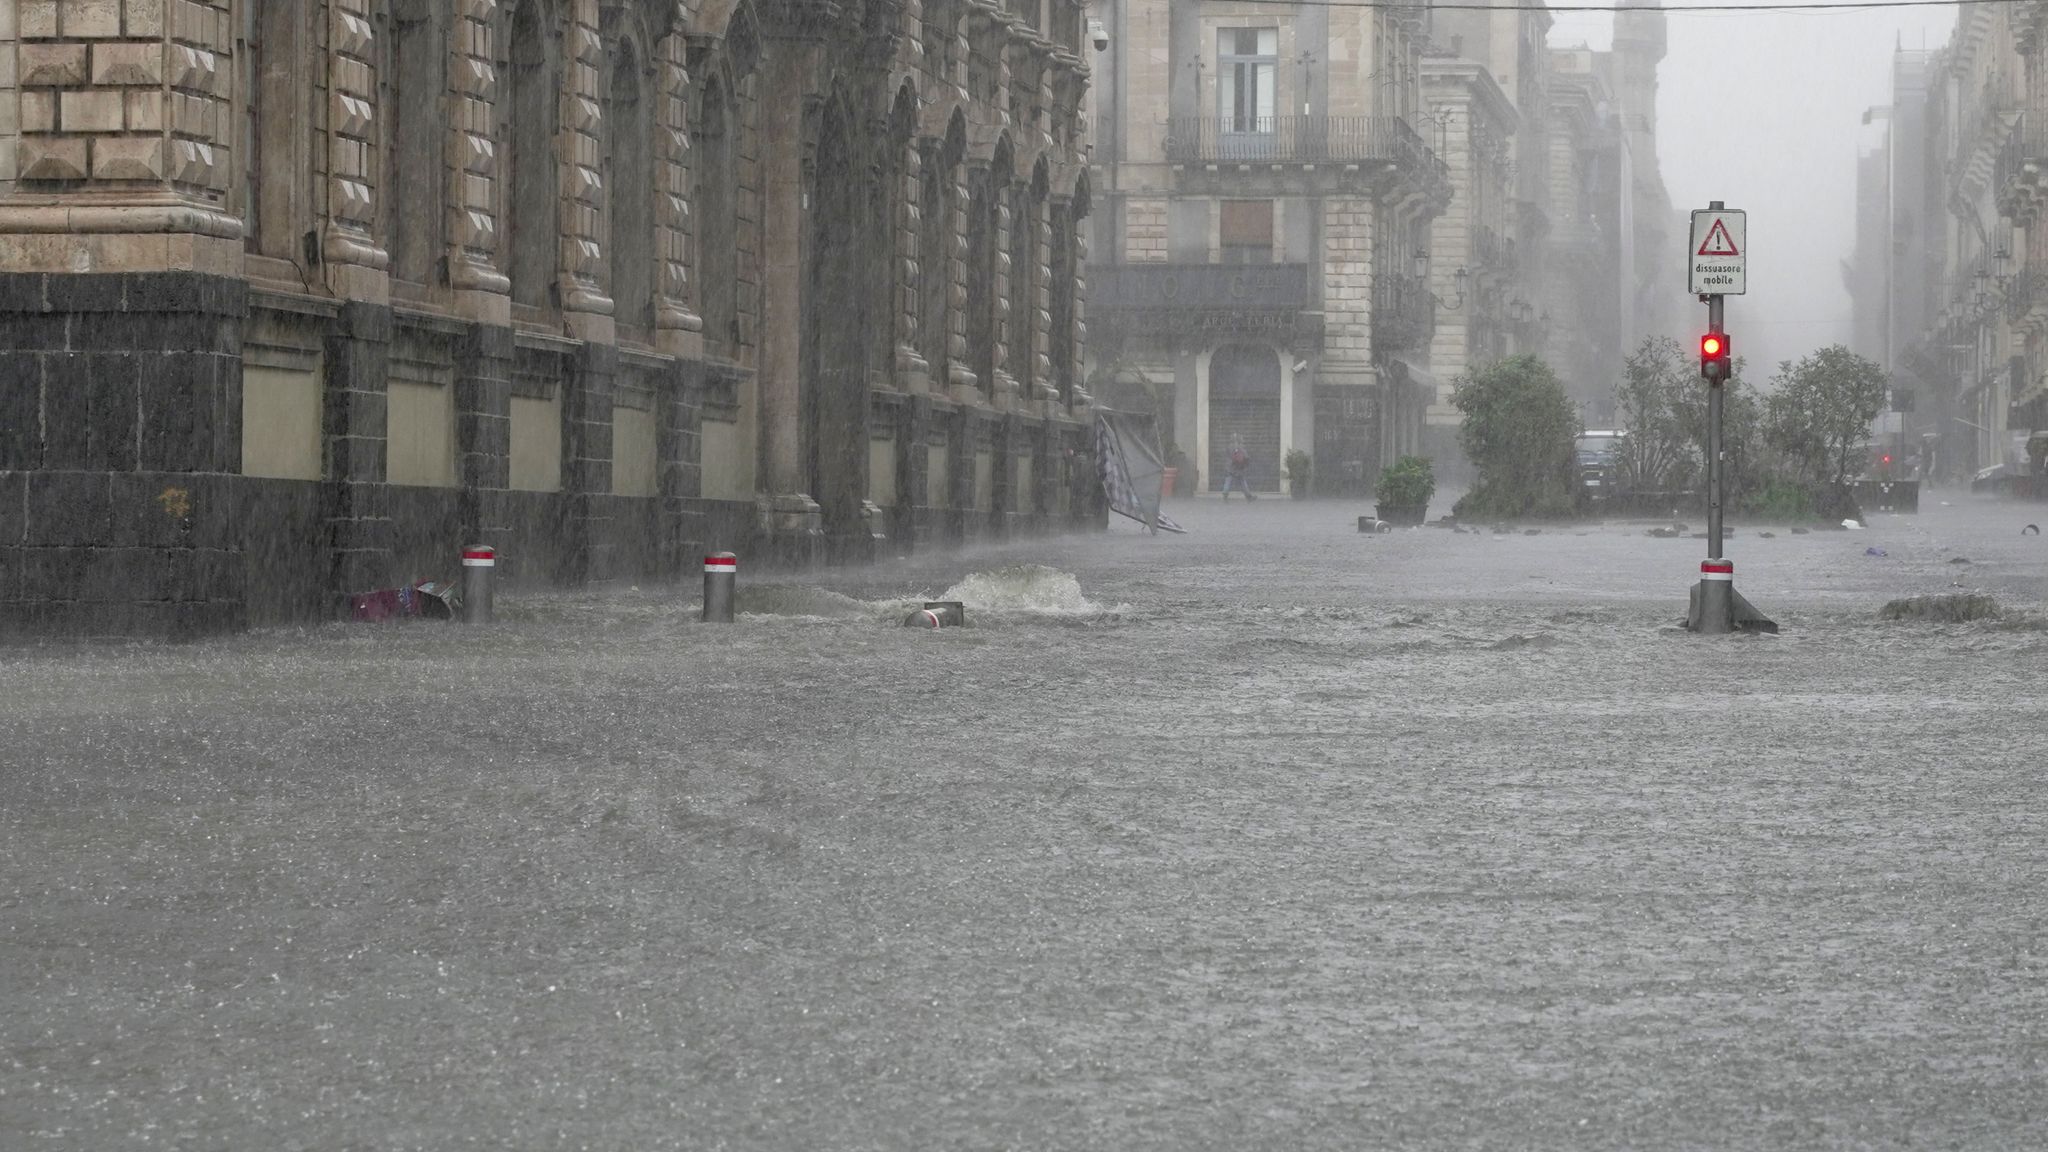 Weather Storm Apollo set to cause heavy rain across parts of Europe